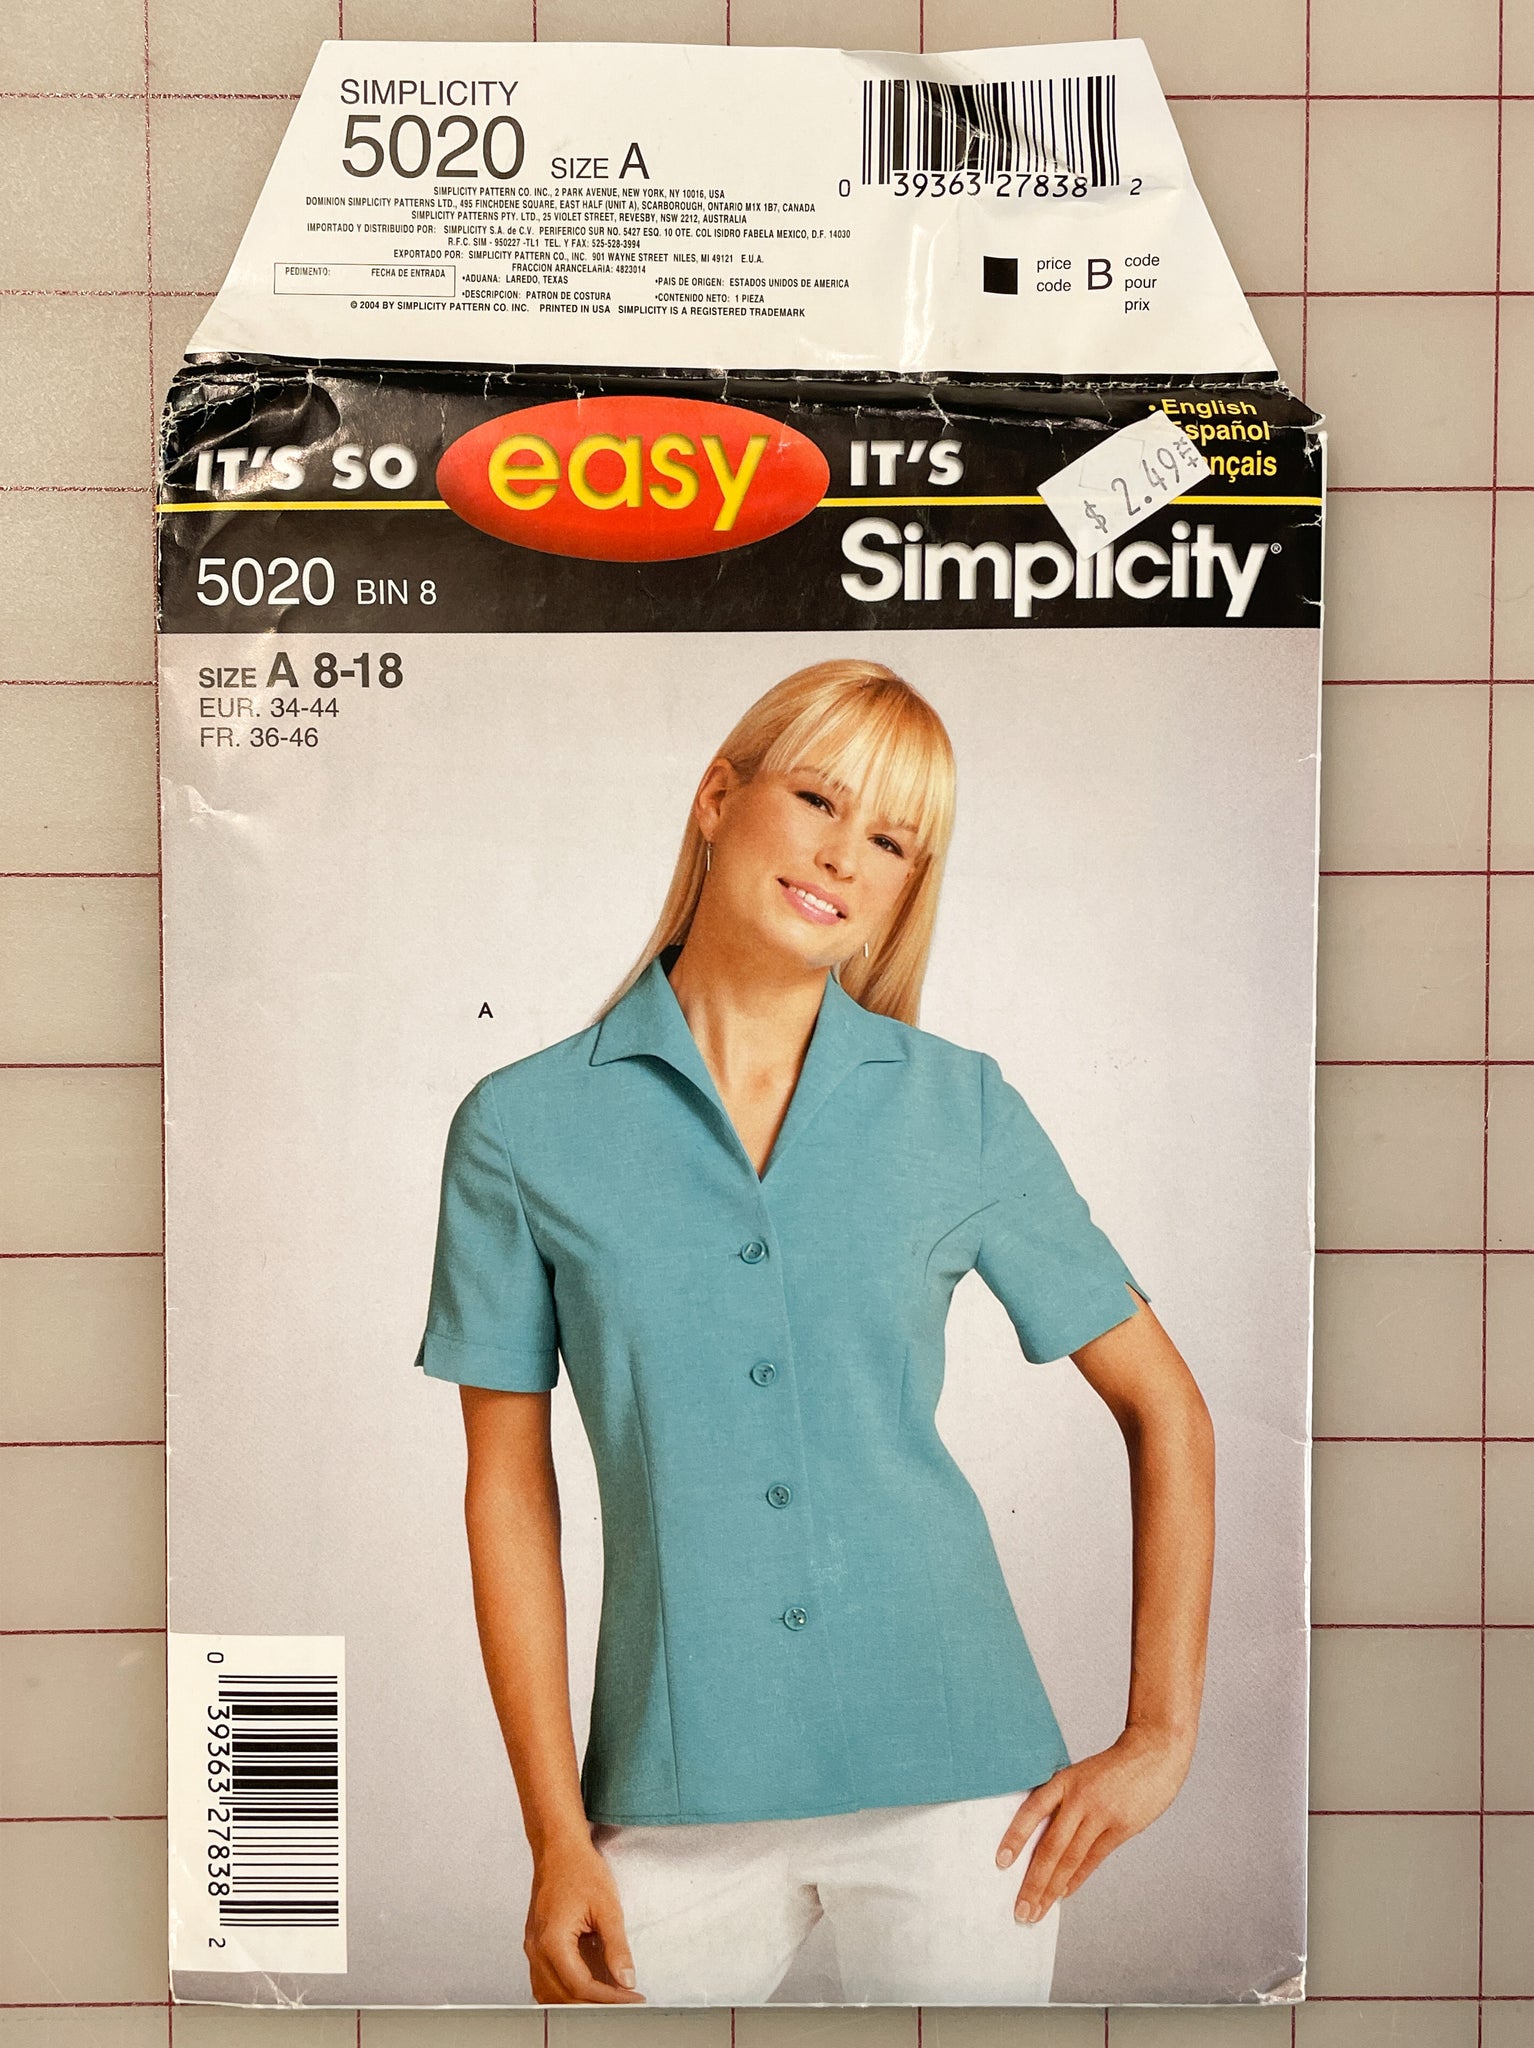 SALE 2004 Simplicity 5020 Pattern - Women's Shirt FACTORY FOLDED